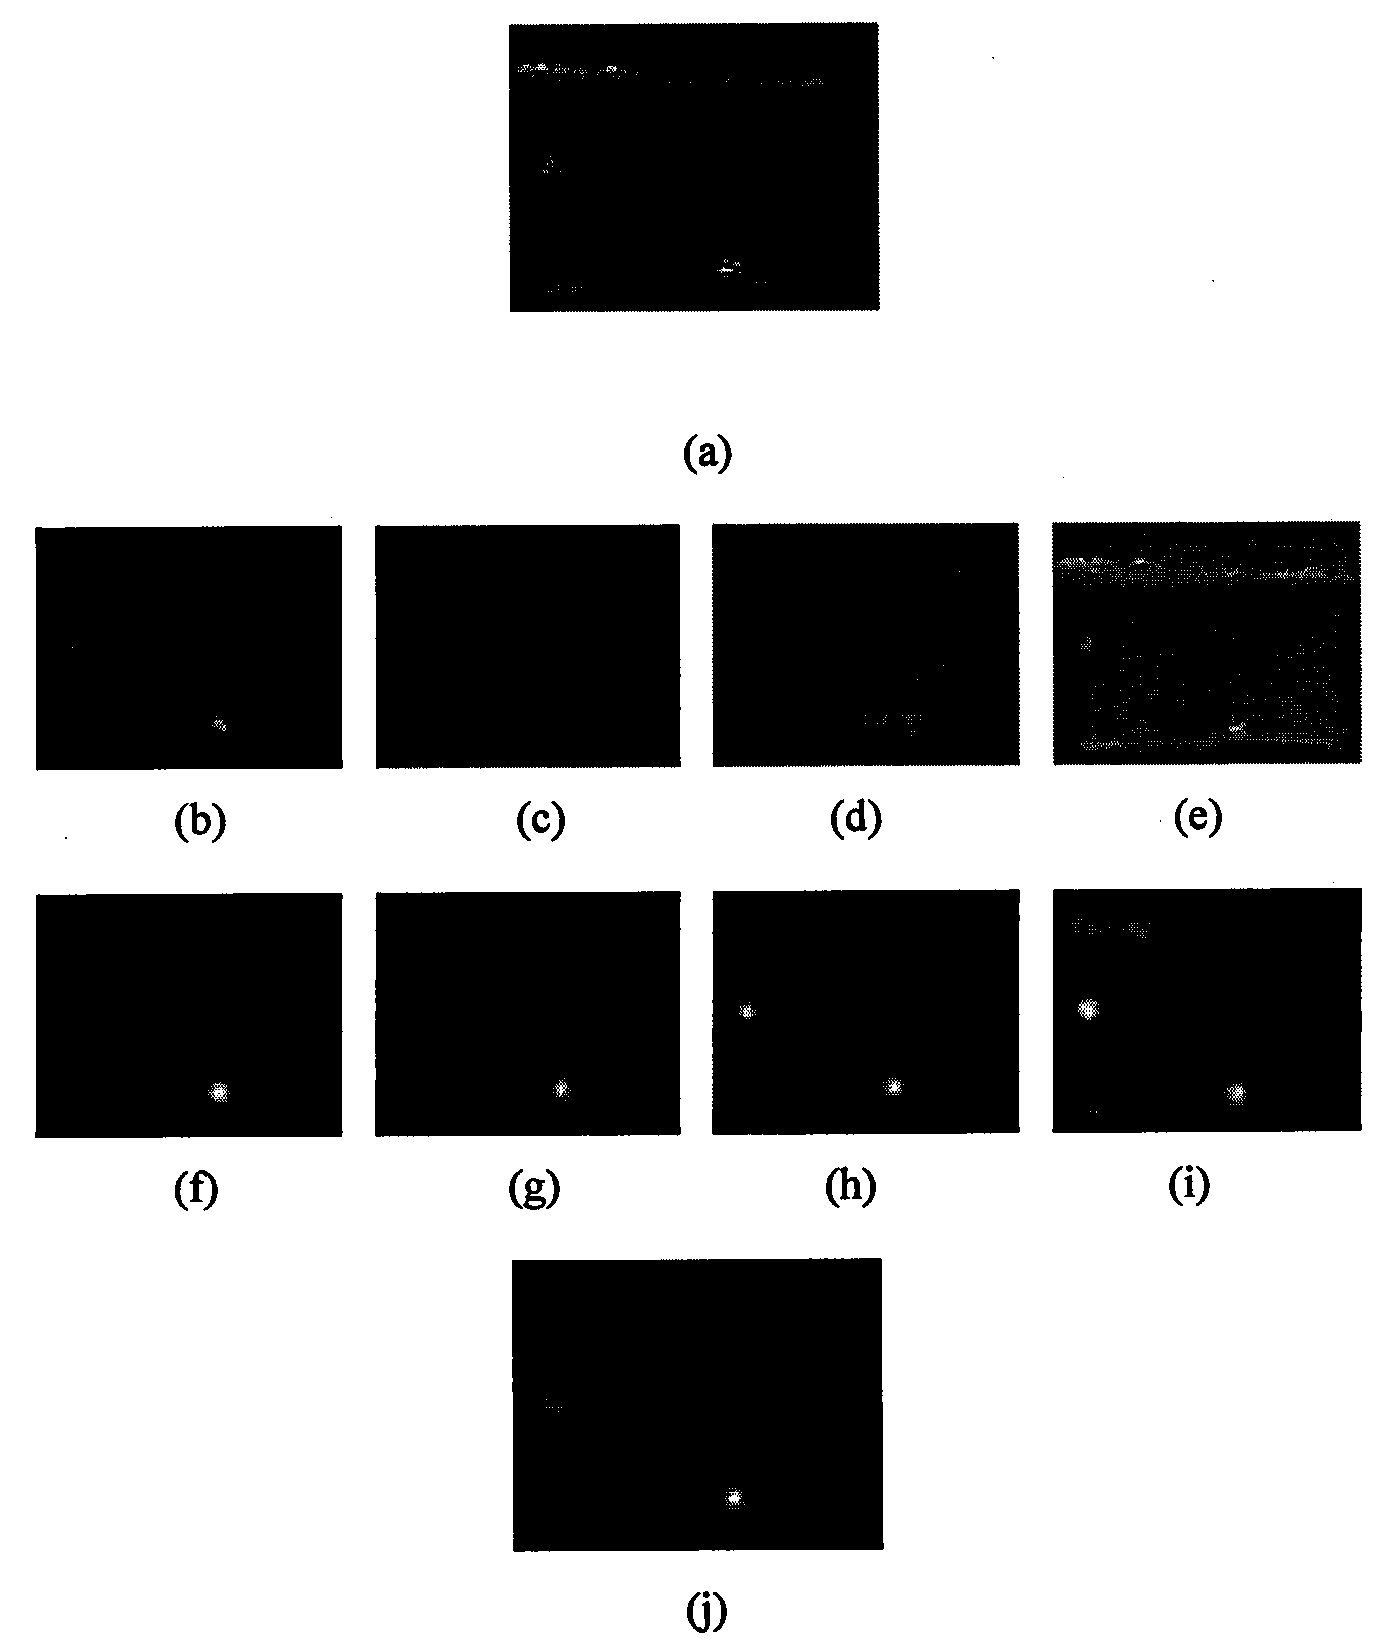 Selective visual attention computation model based on pulse cosine transform